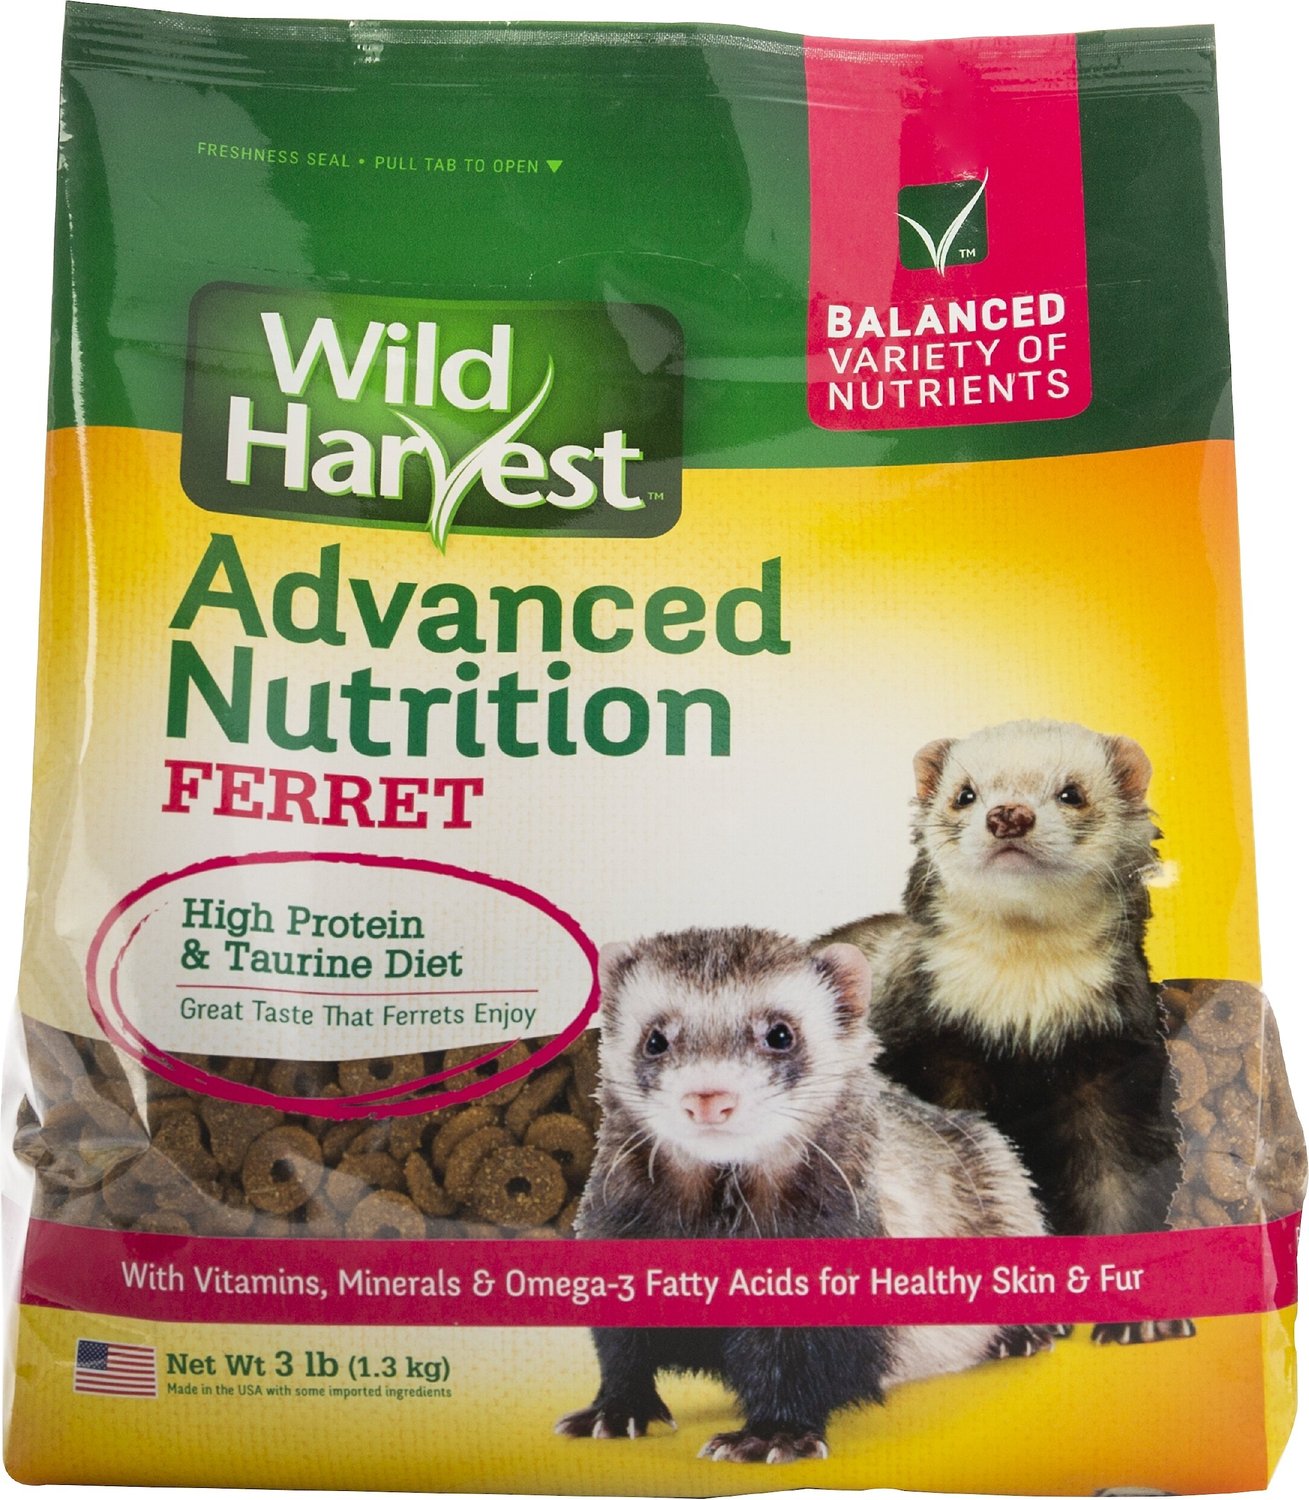 8. Wild Harvest Advanced Nutrition Ferret Food